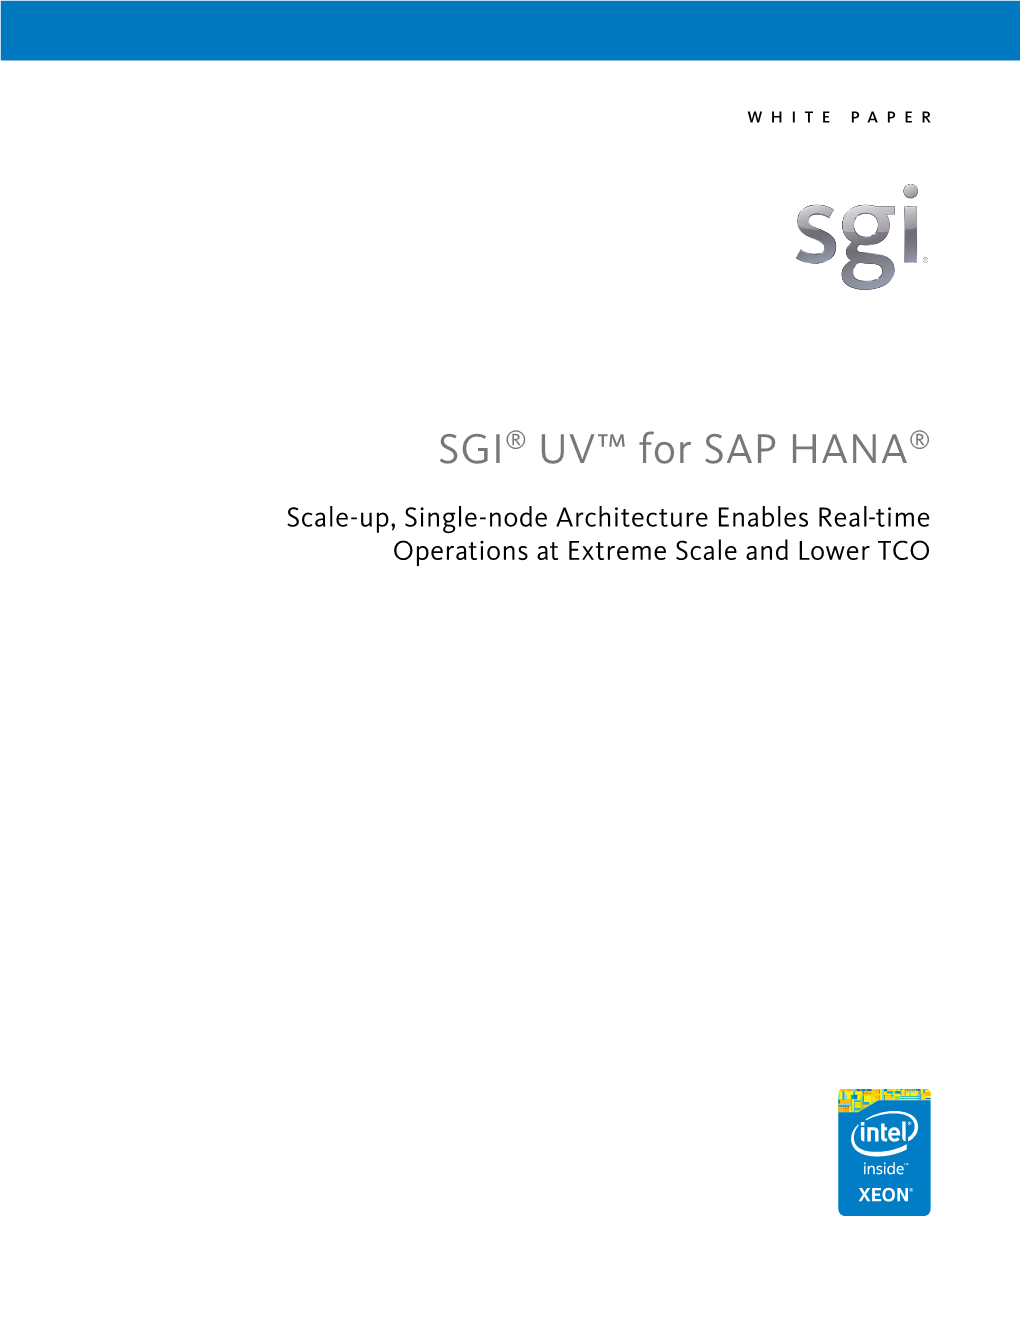 SGI UV for SAP HANA 1